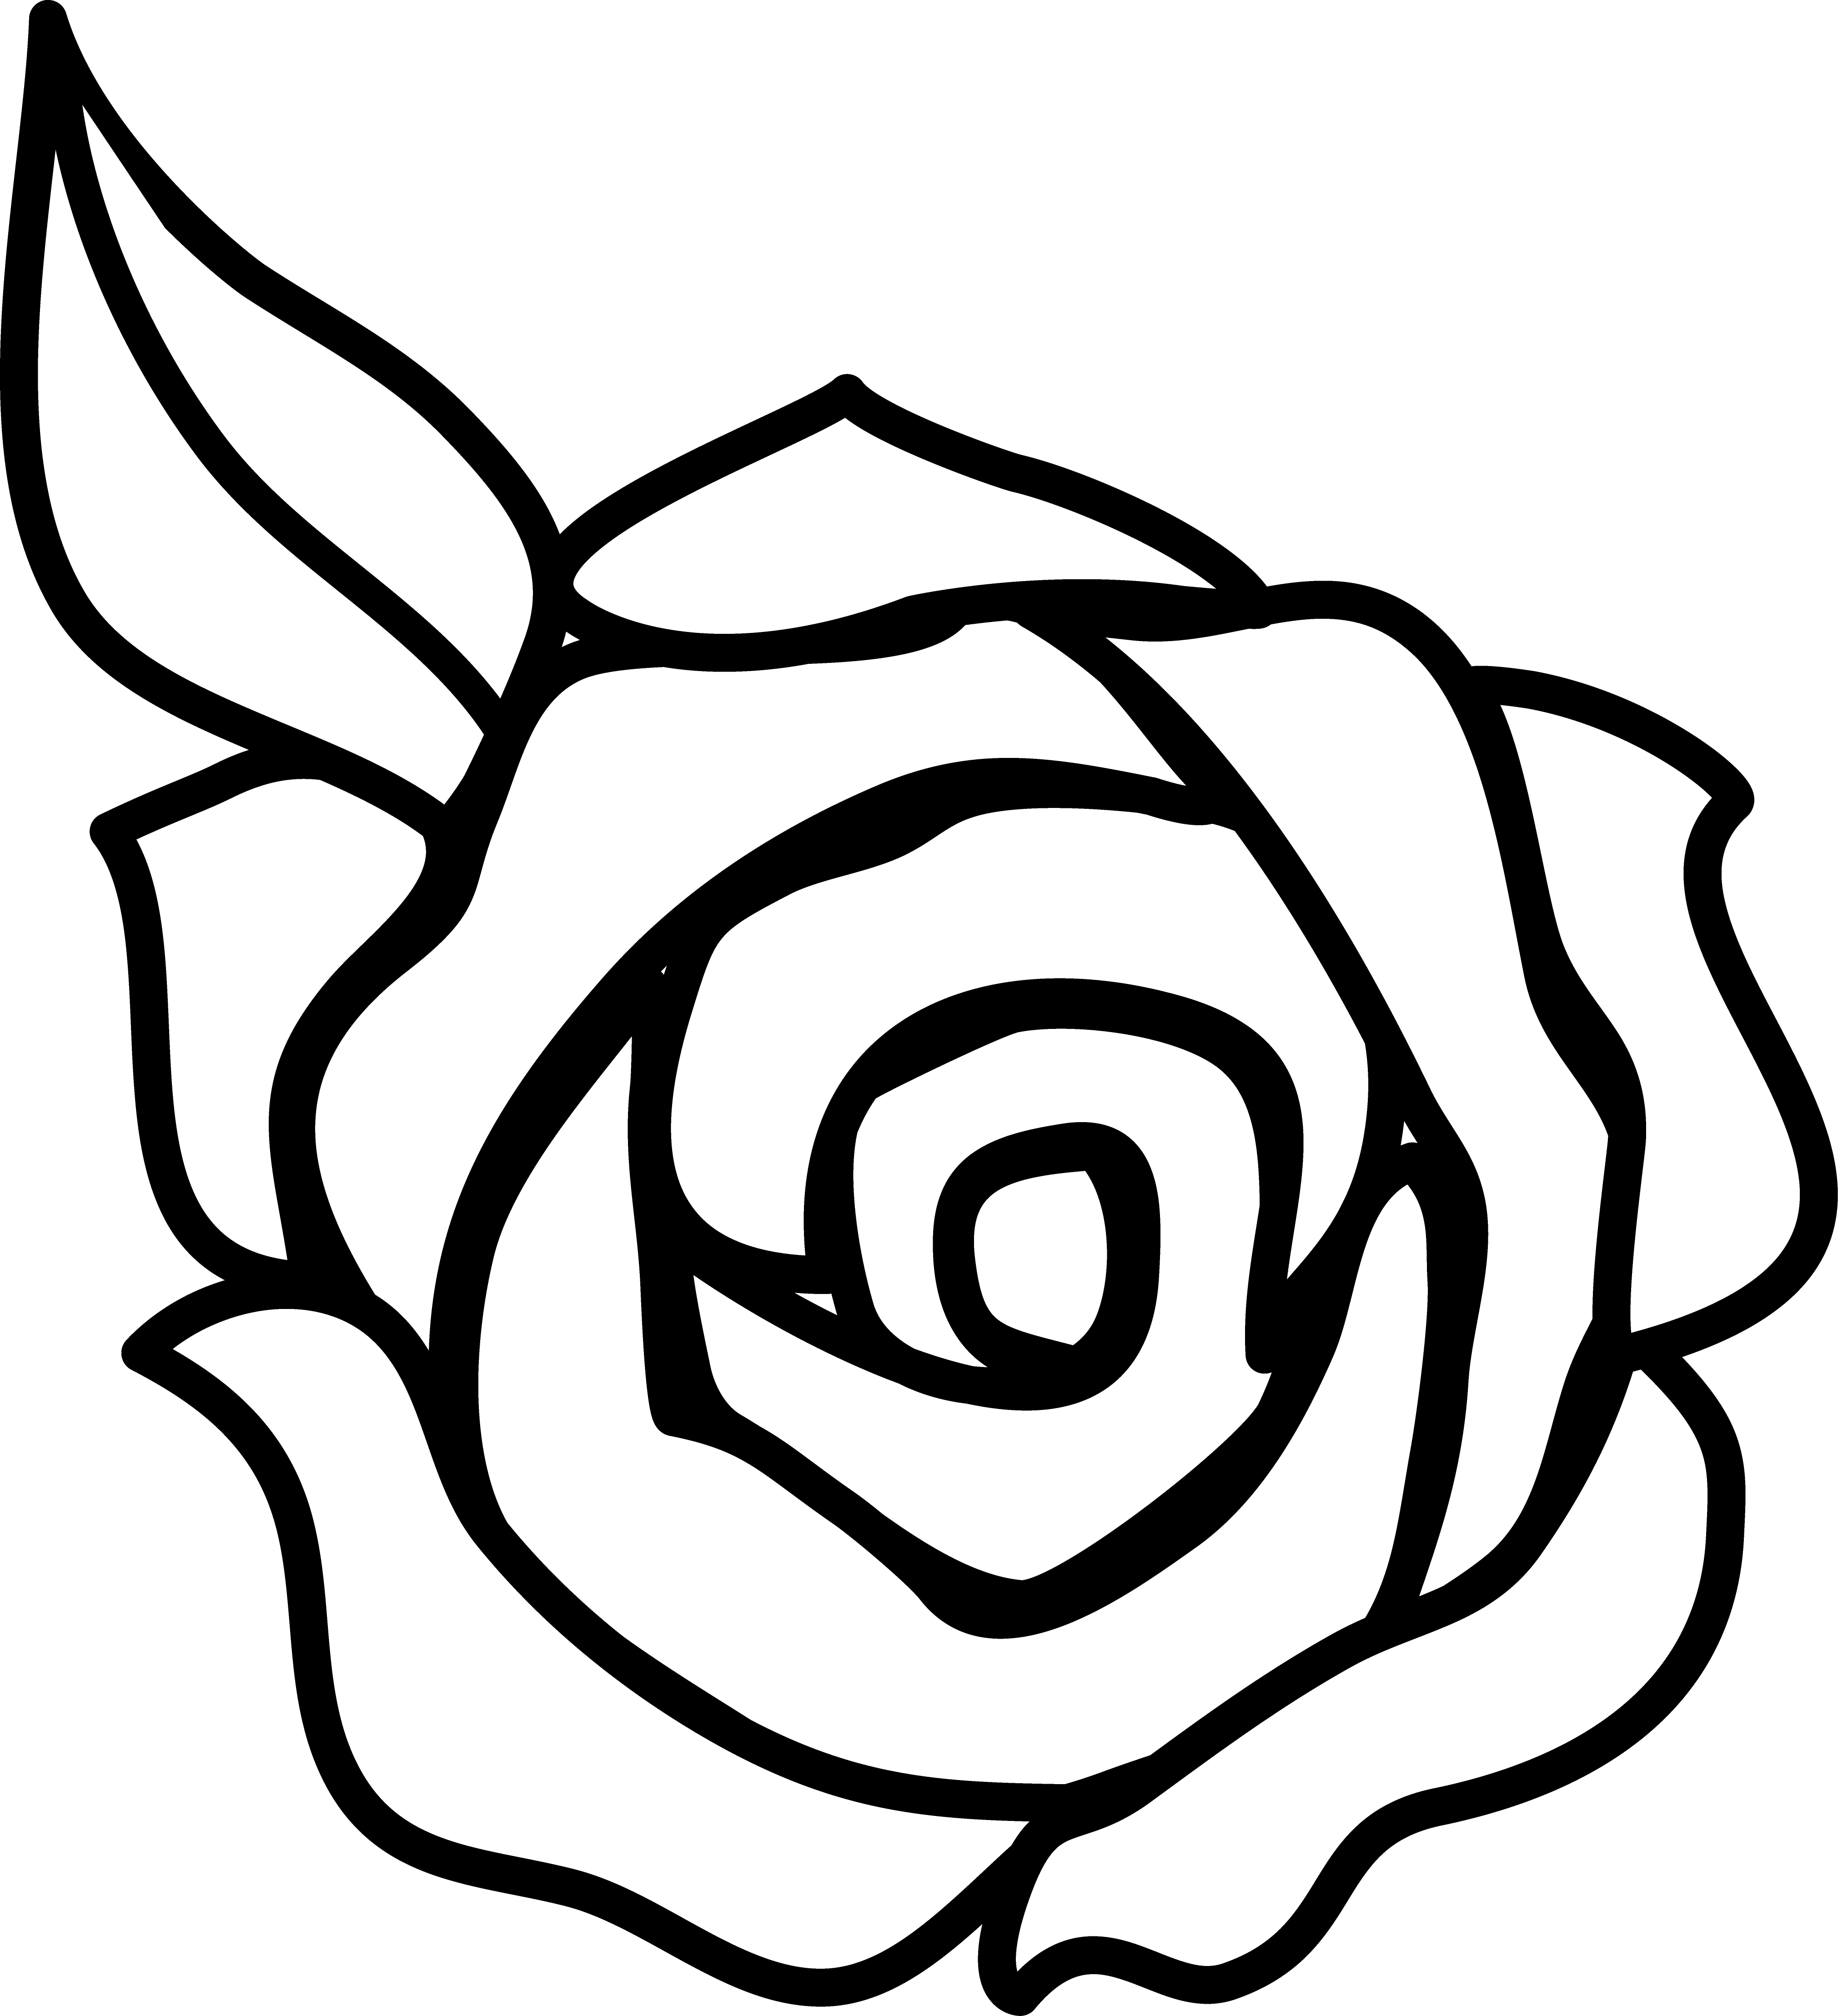 Black And White Rose Border Clip Art   Clipart Panda   Free Clipart